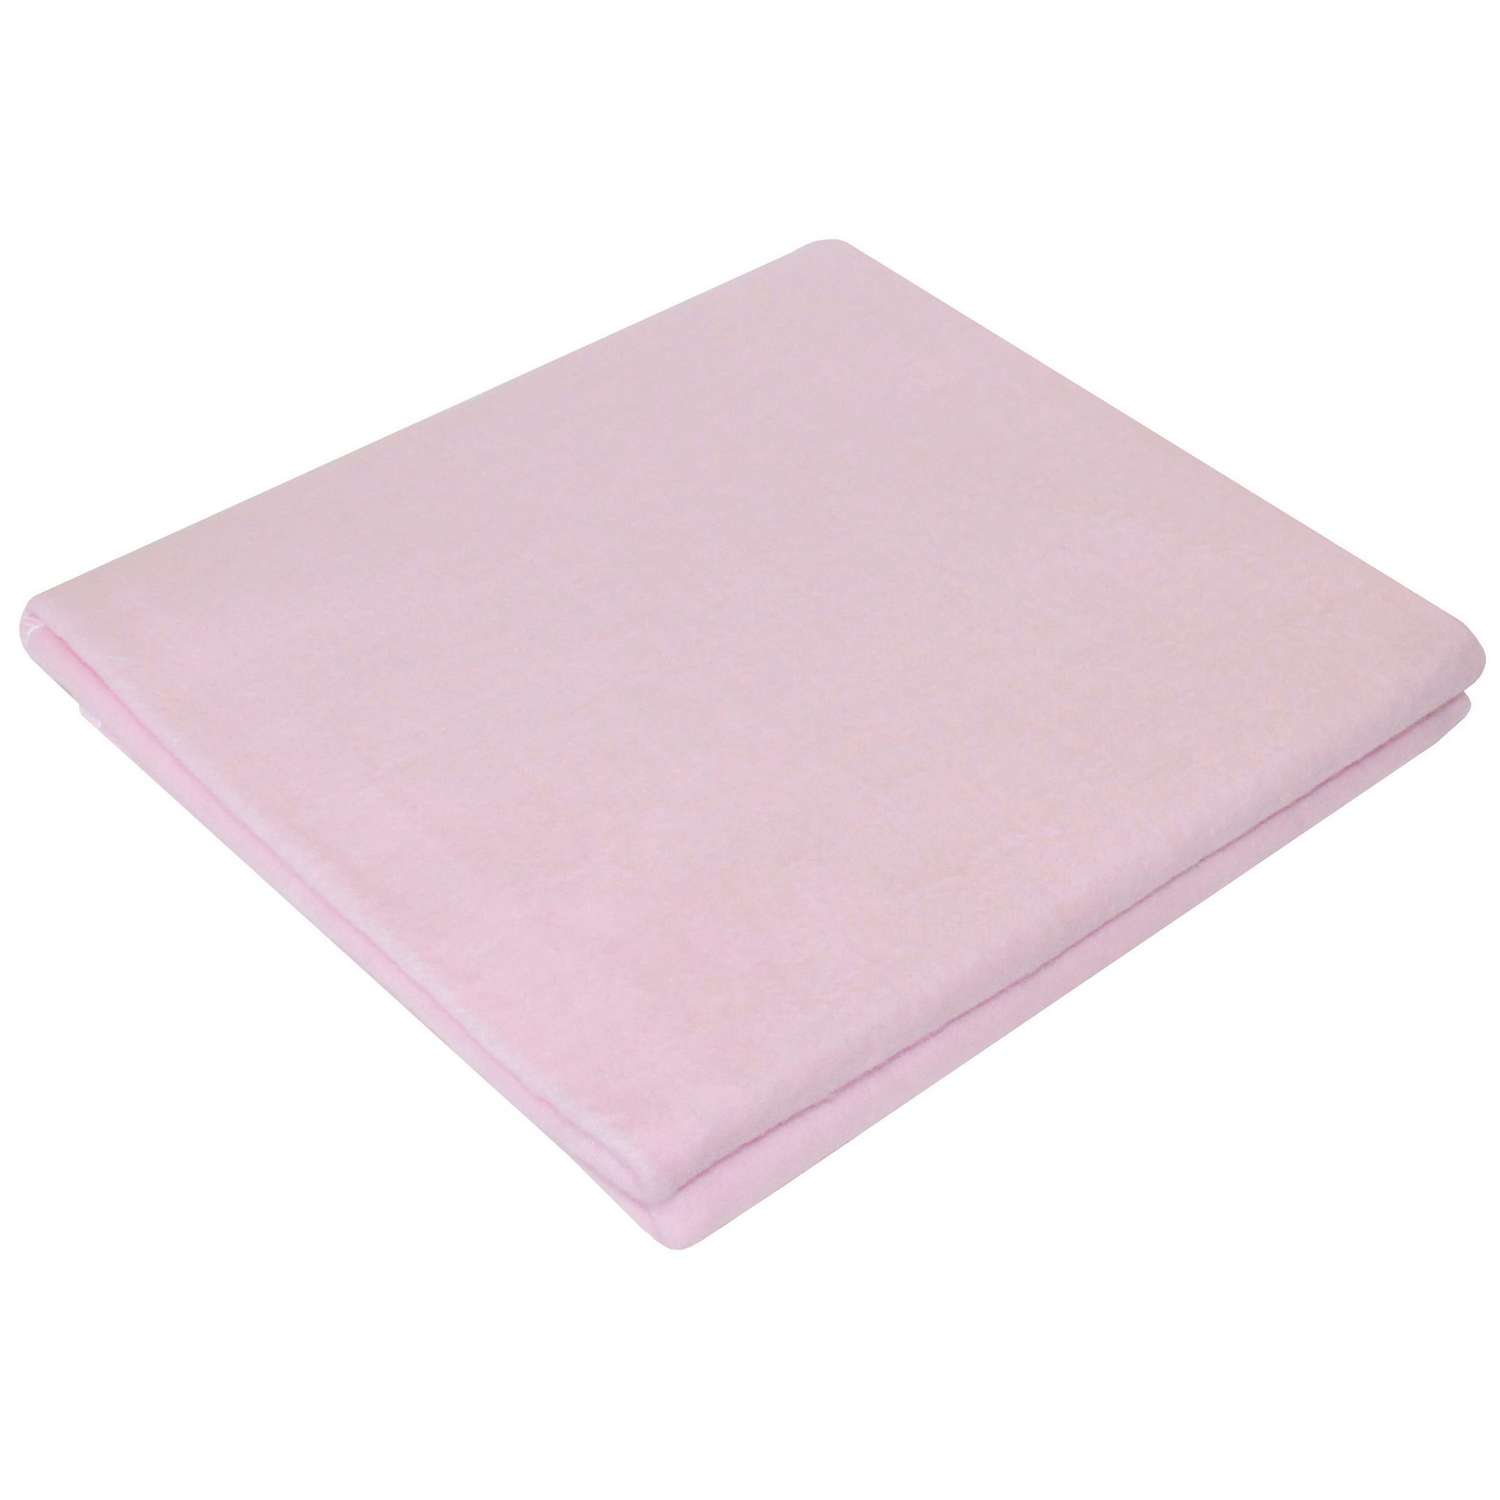 Одеяло байковое Ермошка Фламинго 57-6 ЕТЖ Премиум - фото 1